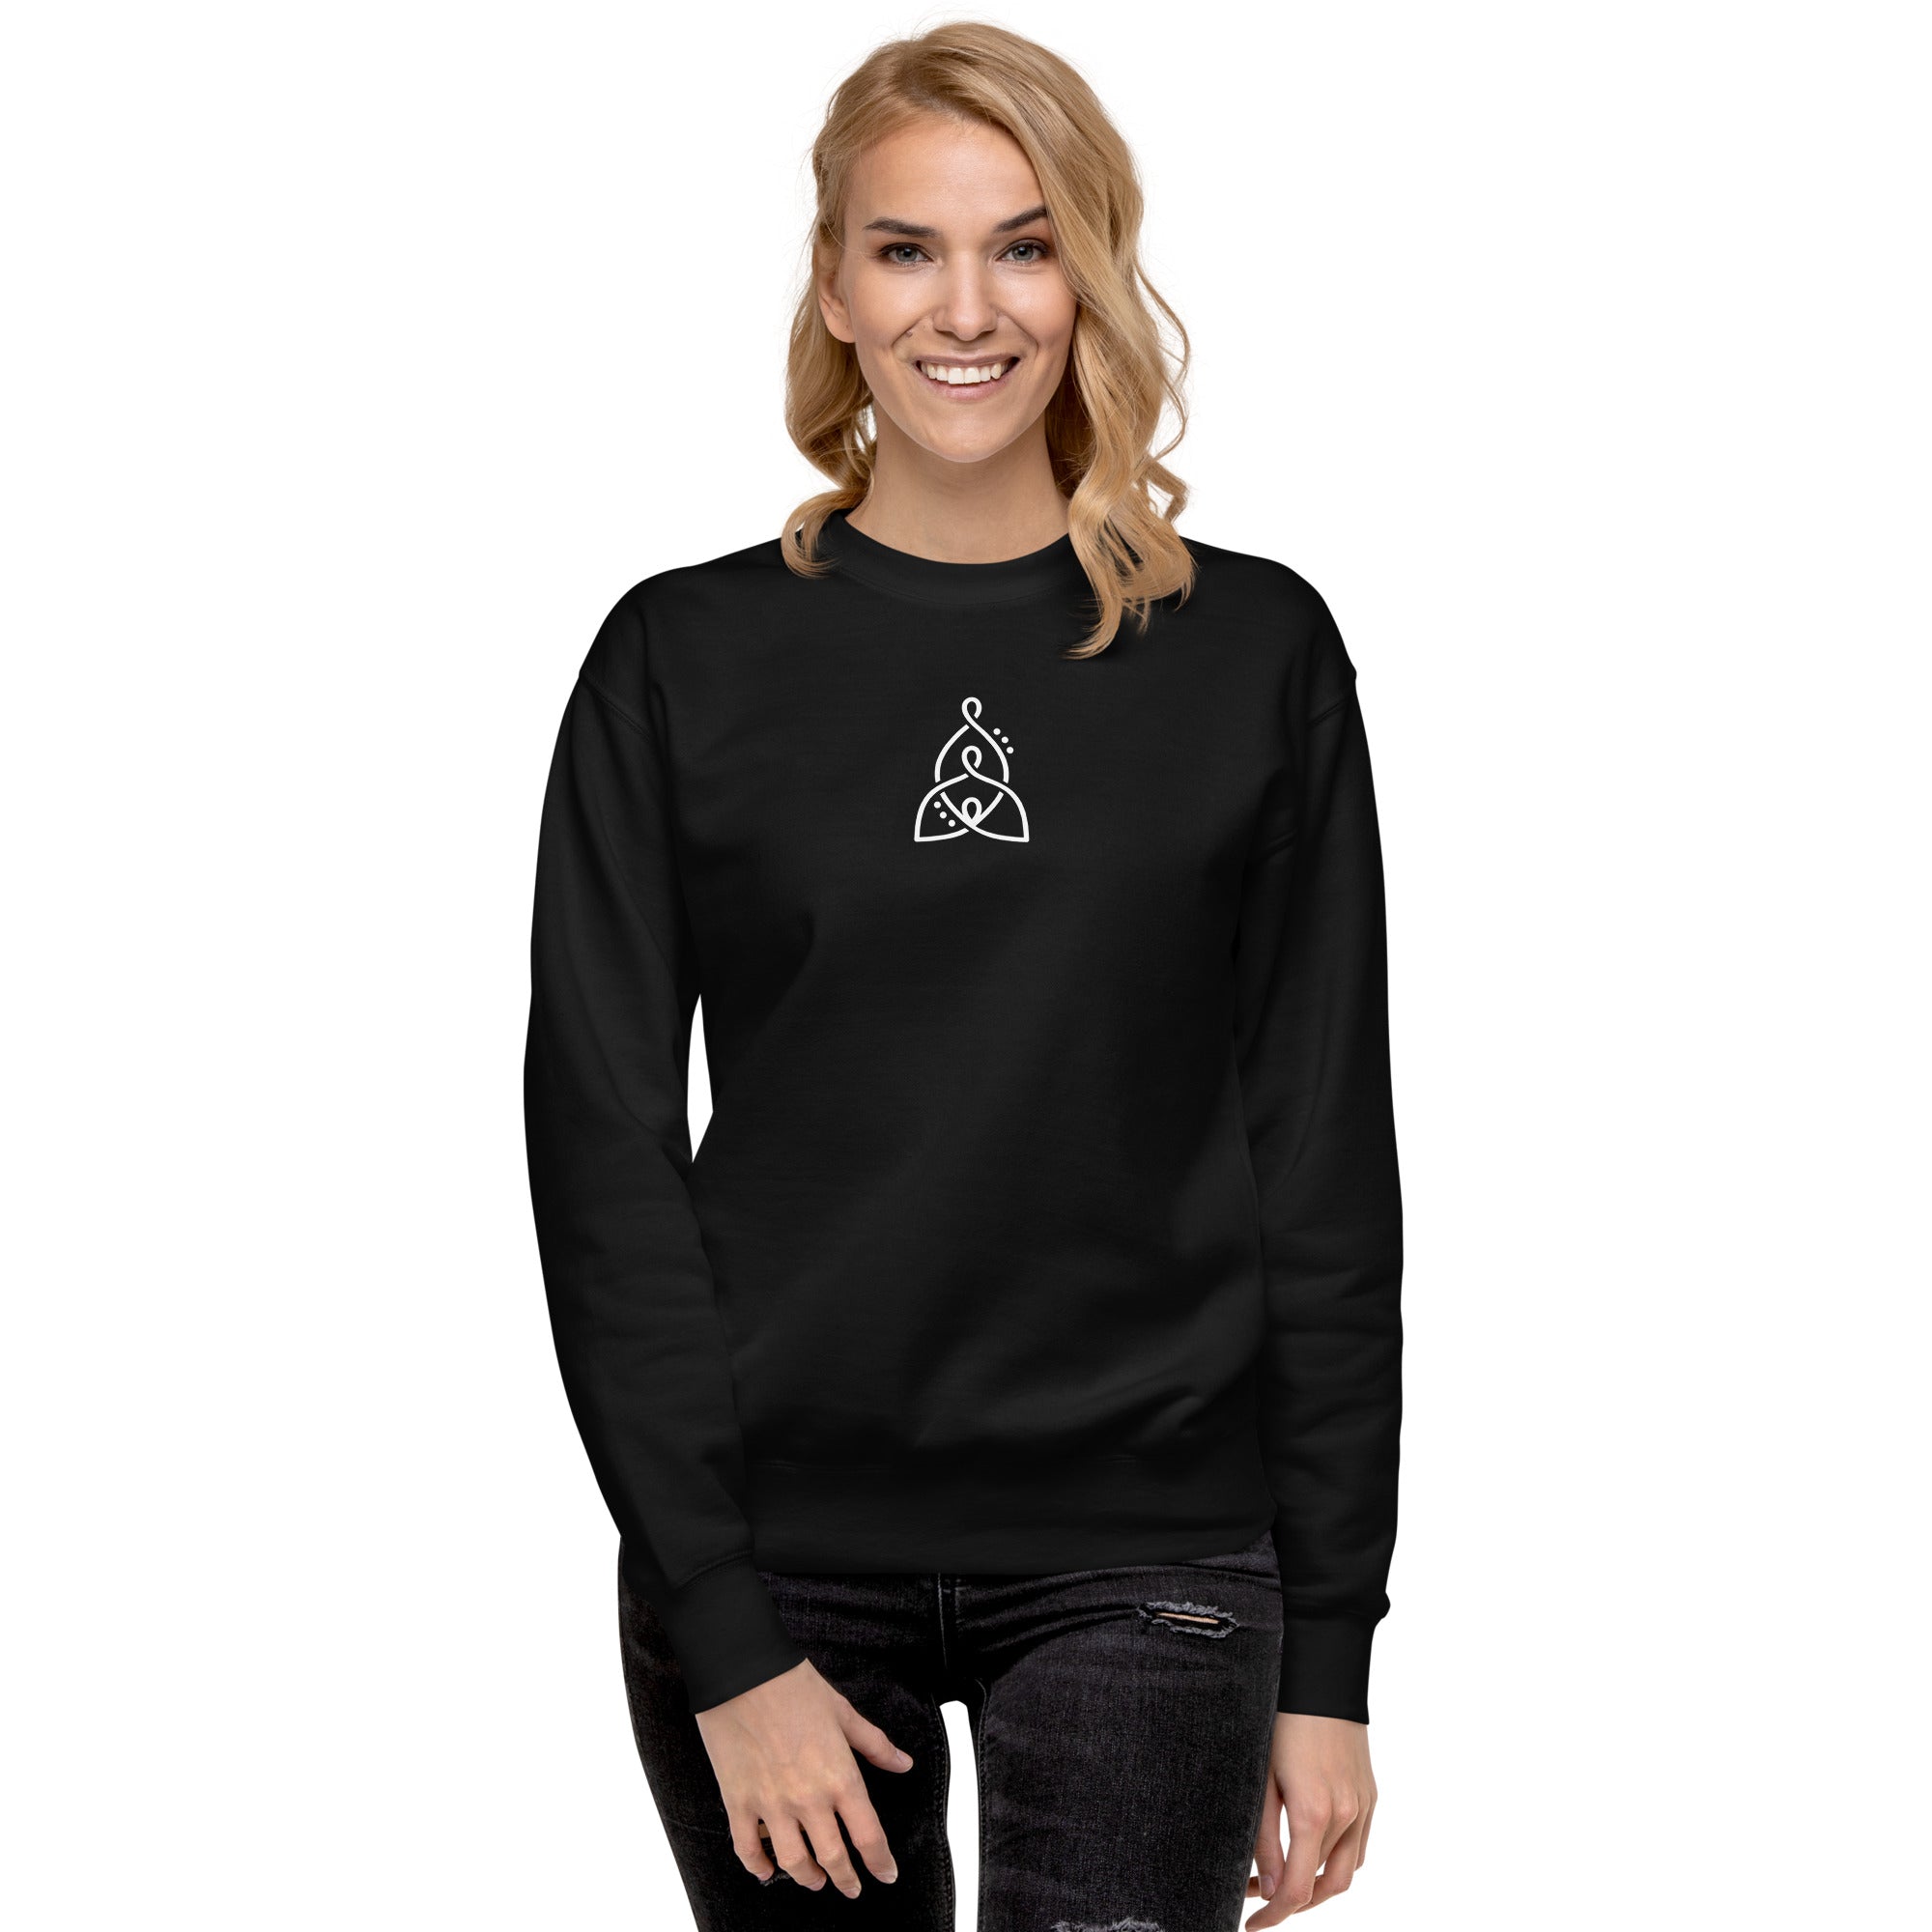 unisex-premium-sweatshirt-black-front-2-663d0a383be1f.jpg